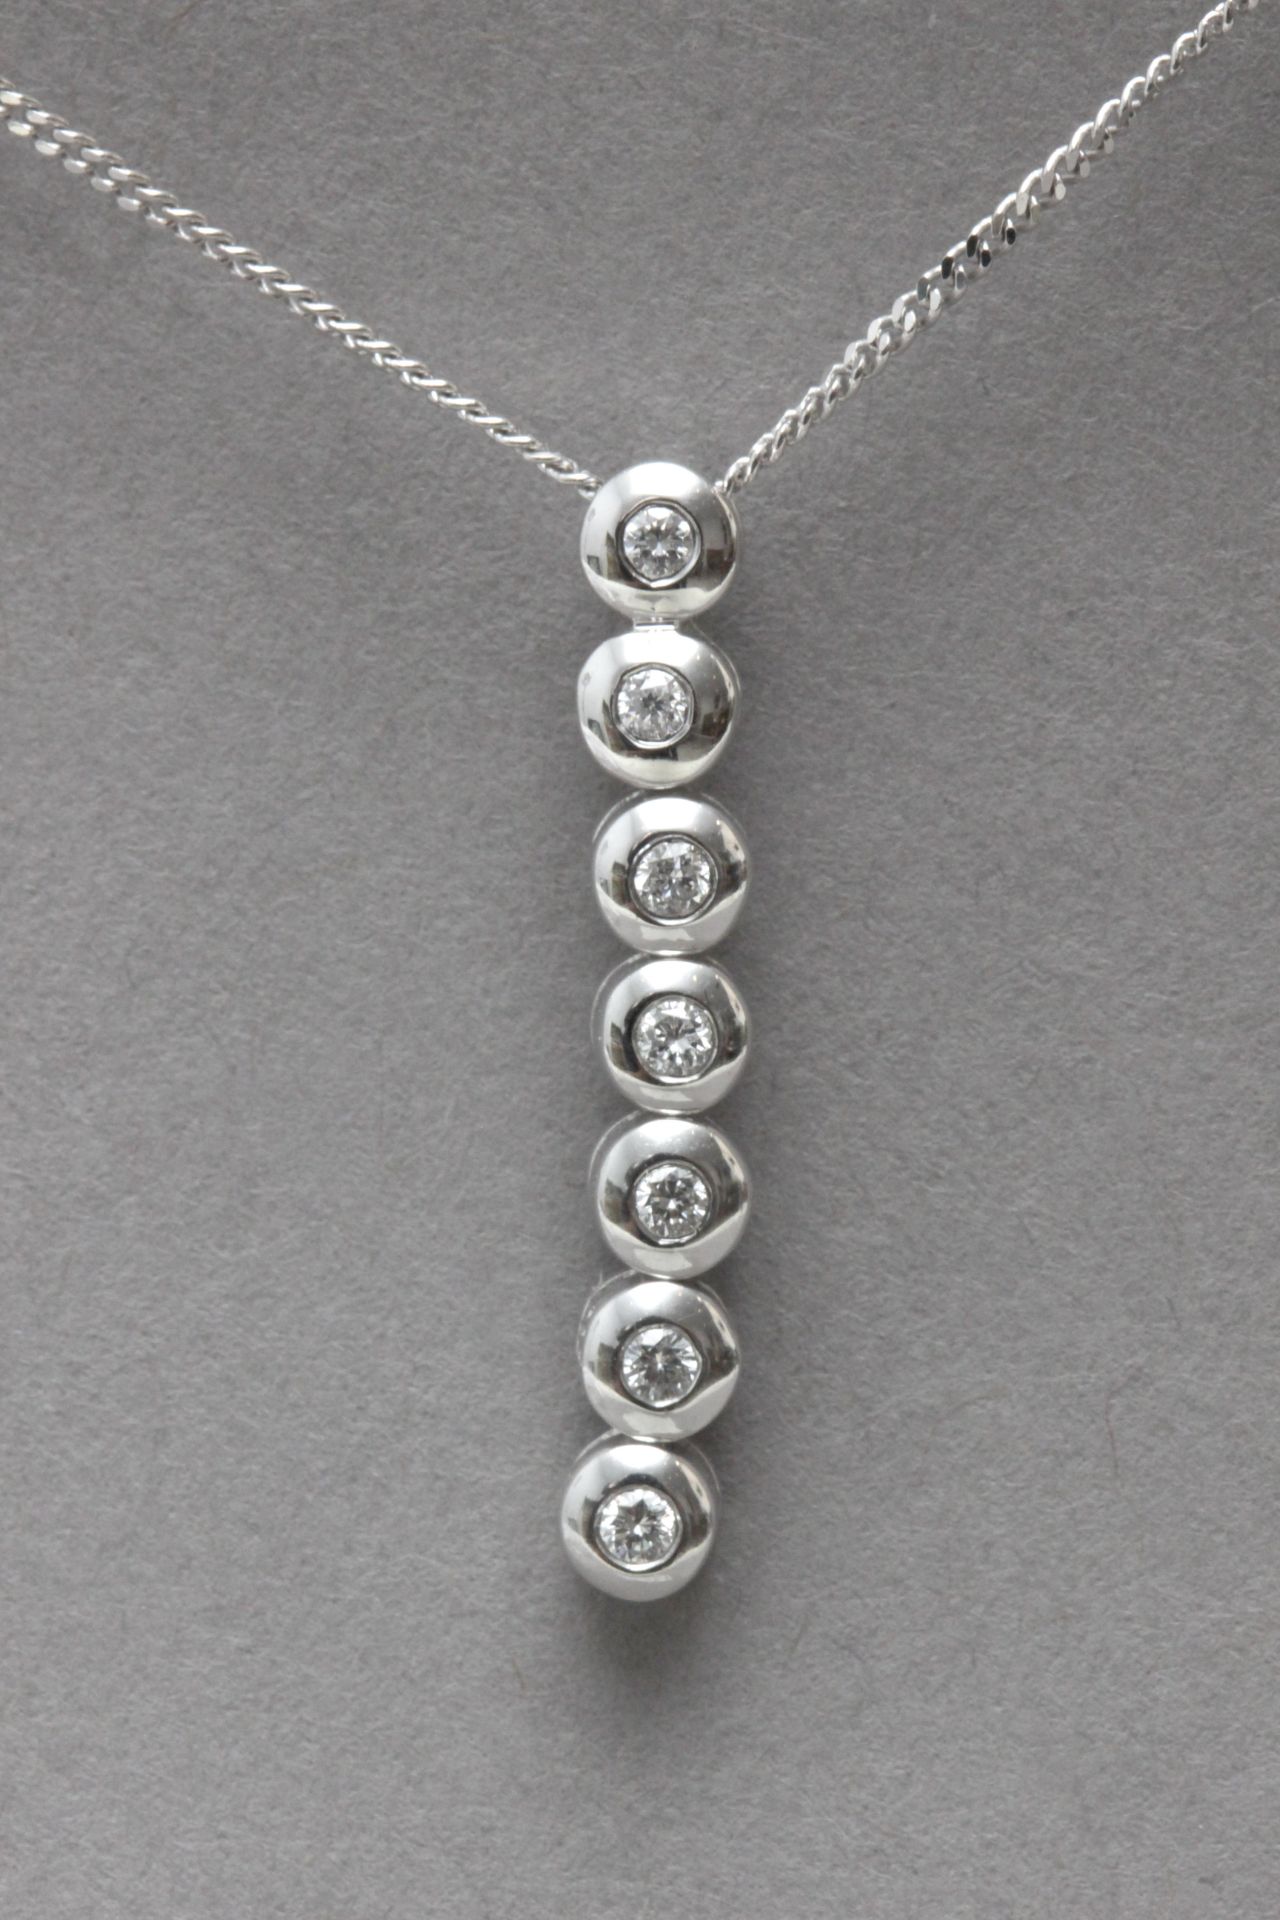 A brilliant cut diamonds pendant with a bezel setting